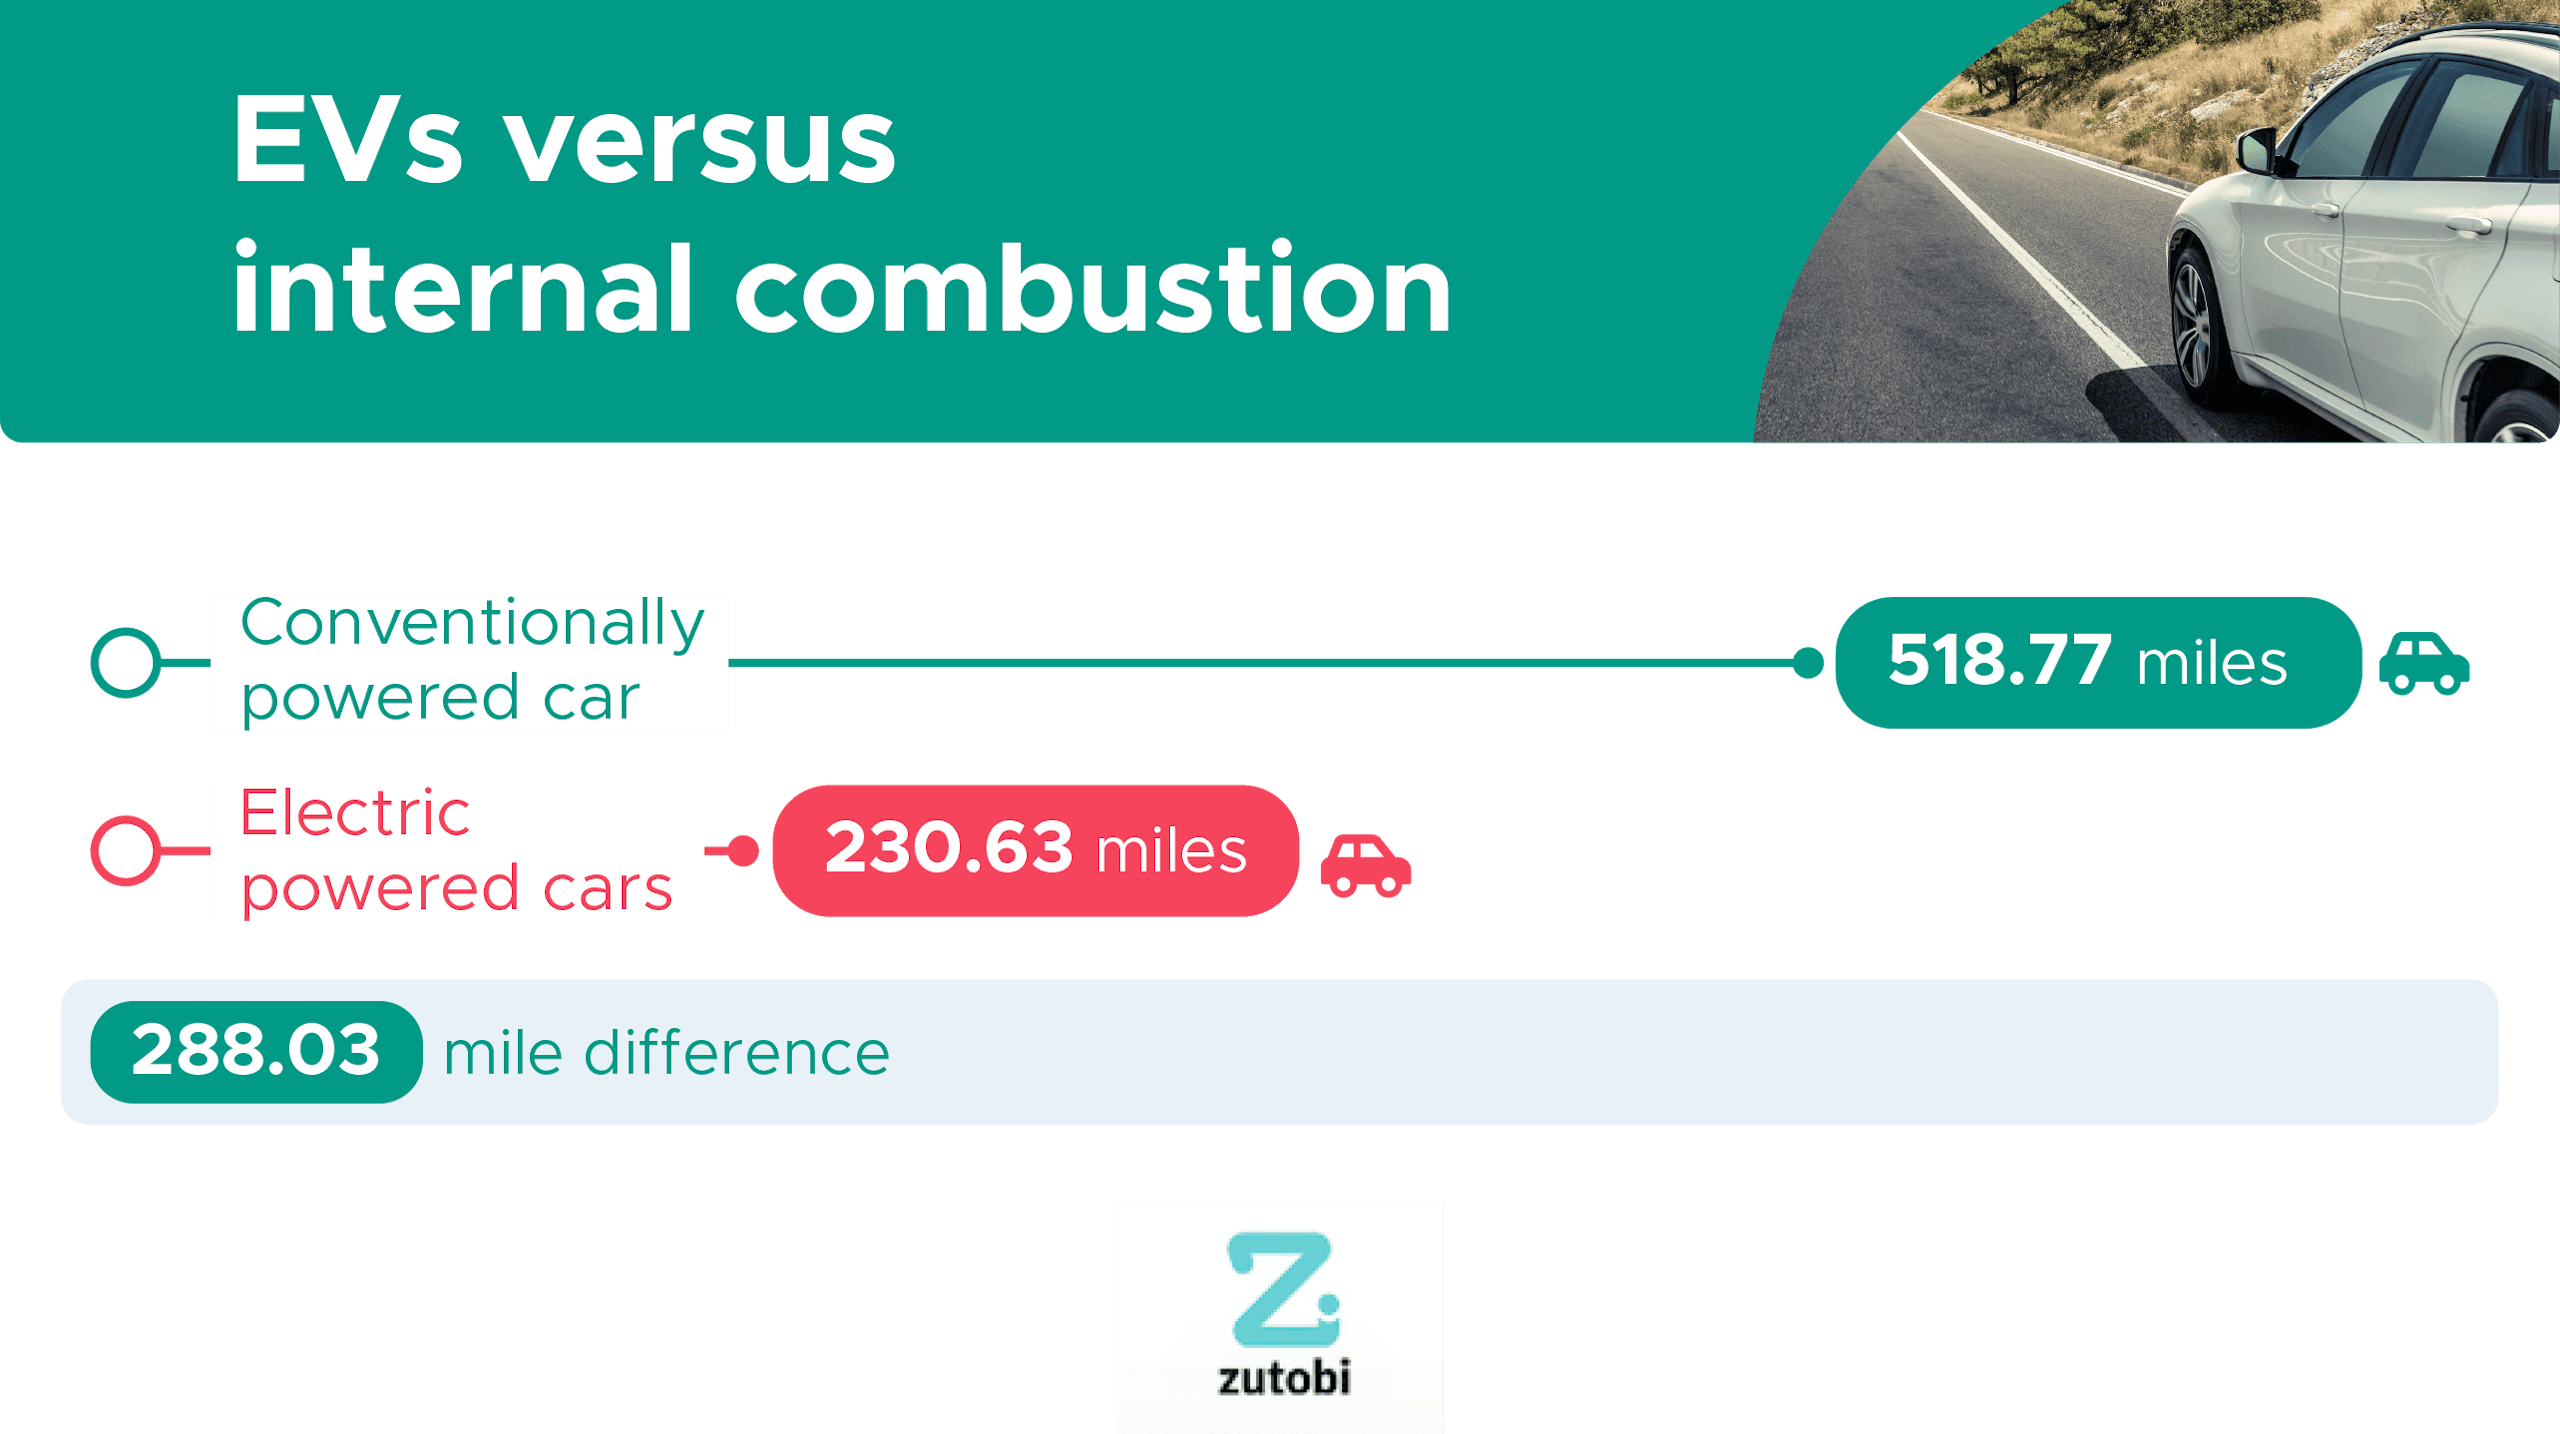 EVs versus internal combustion